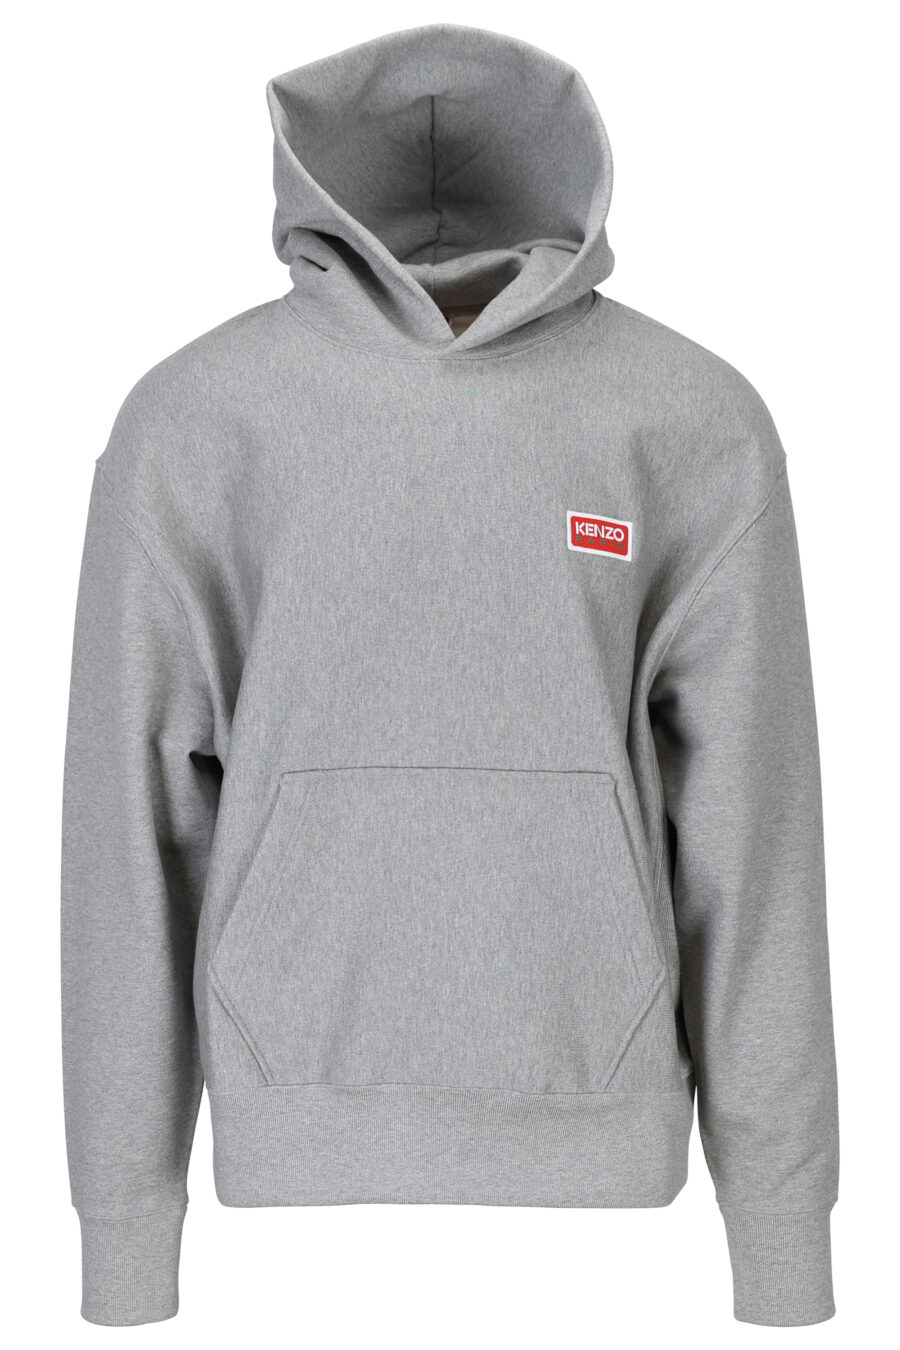 Grey hooded sweatshirt with "kenzo paris" maxilogo on the back - 3612230537491